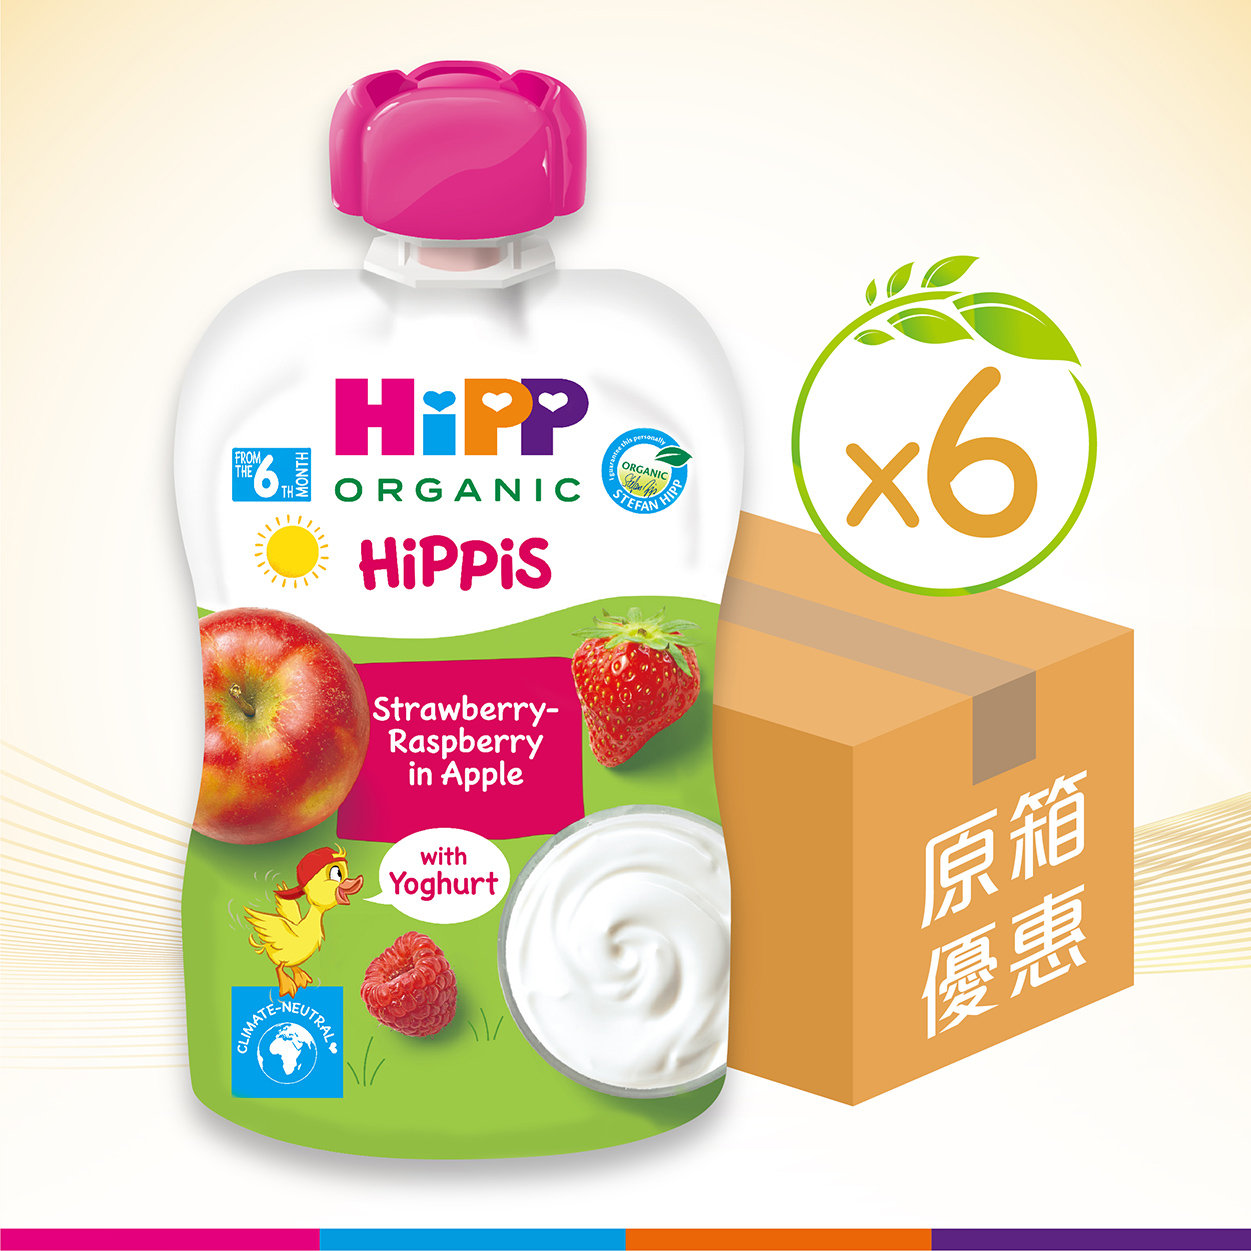 hipp-organic-apple-mixed-berries-yoghurt-6-pcs-new-arrival